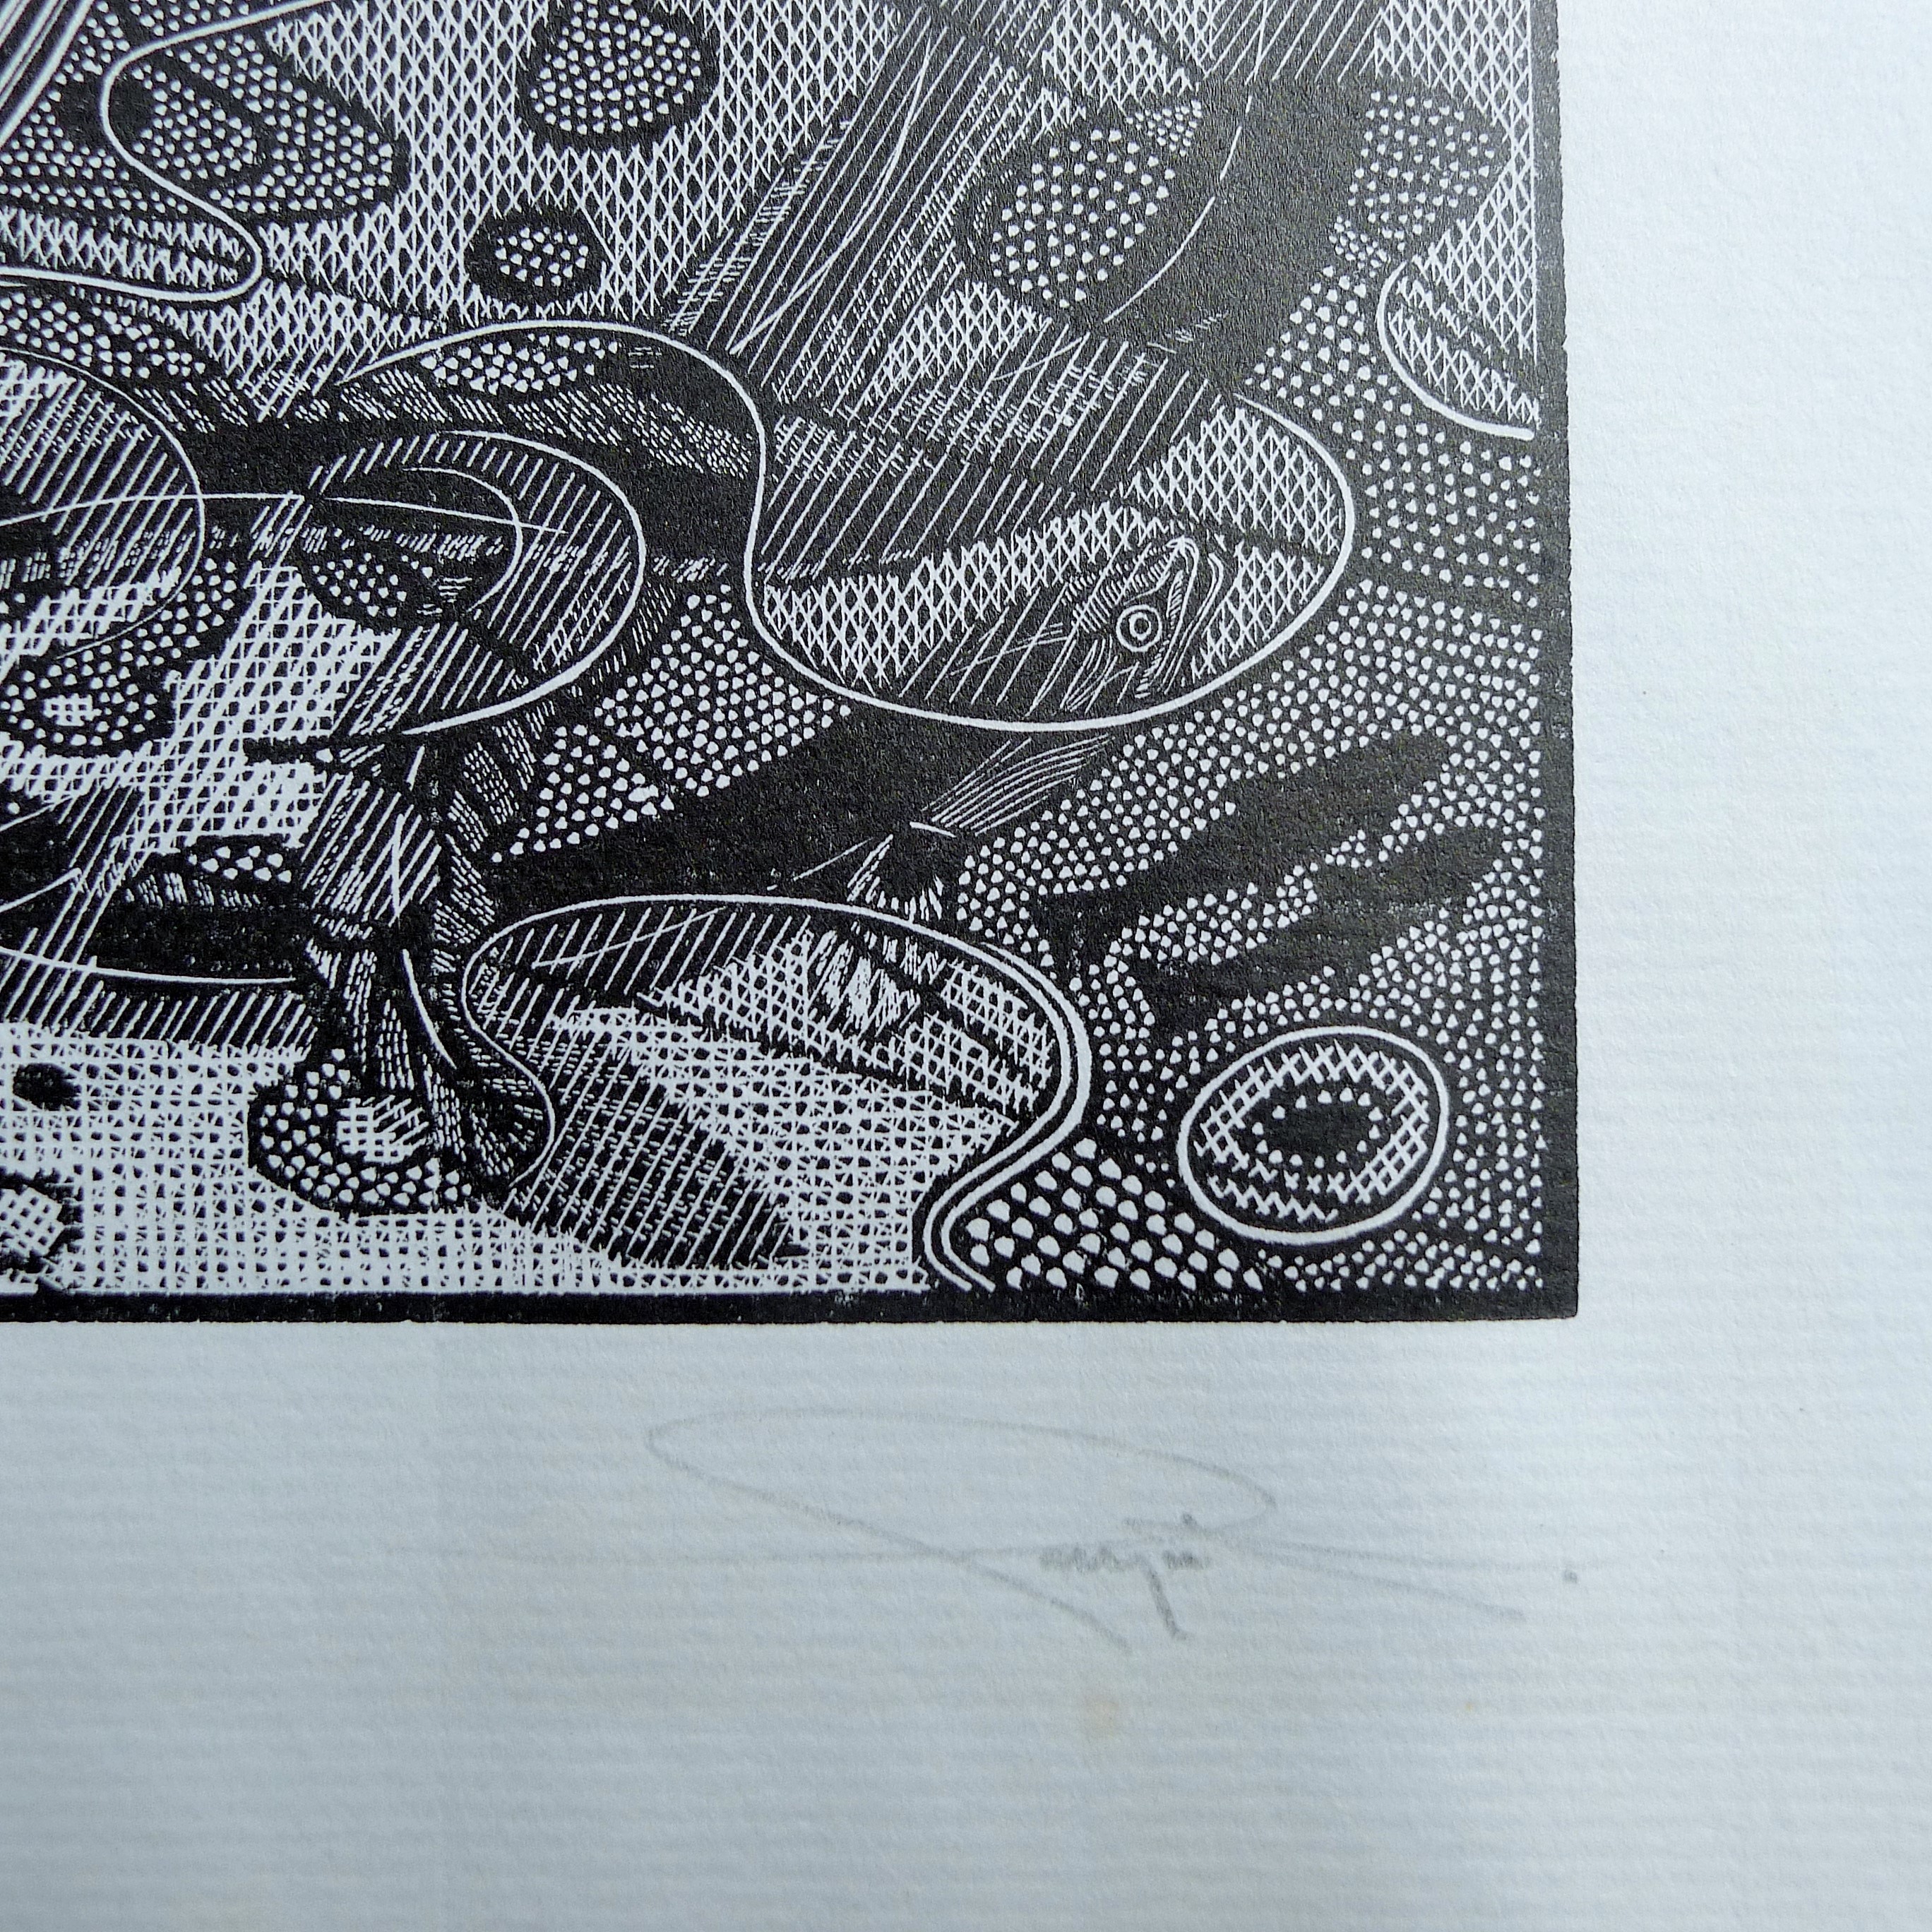 SEE-PAYNTON, COLIN (born 1946) British (AR), Grey Heron and Eel, wood engraving, - Image 3 of 5